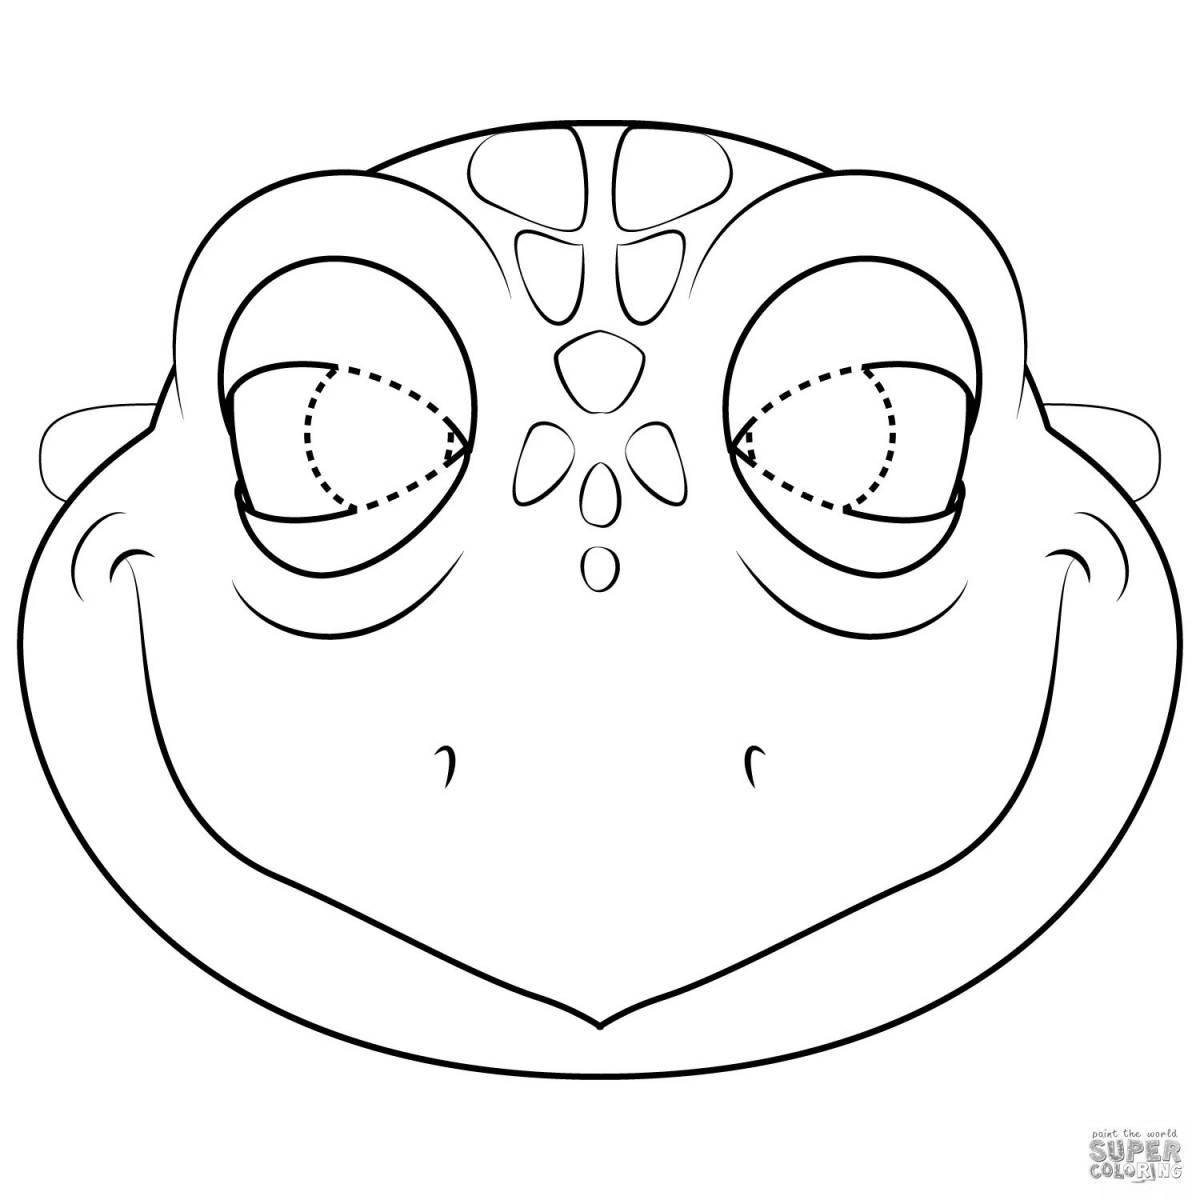 Coloring crocodile mask